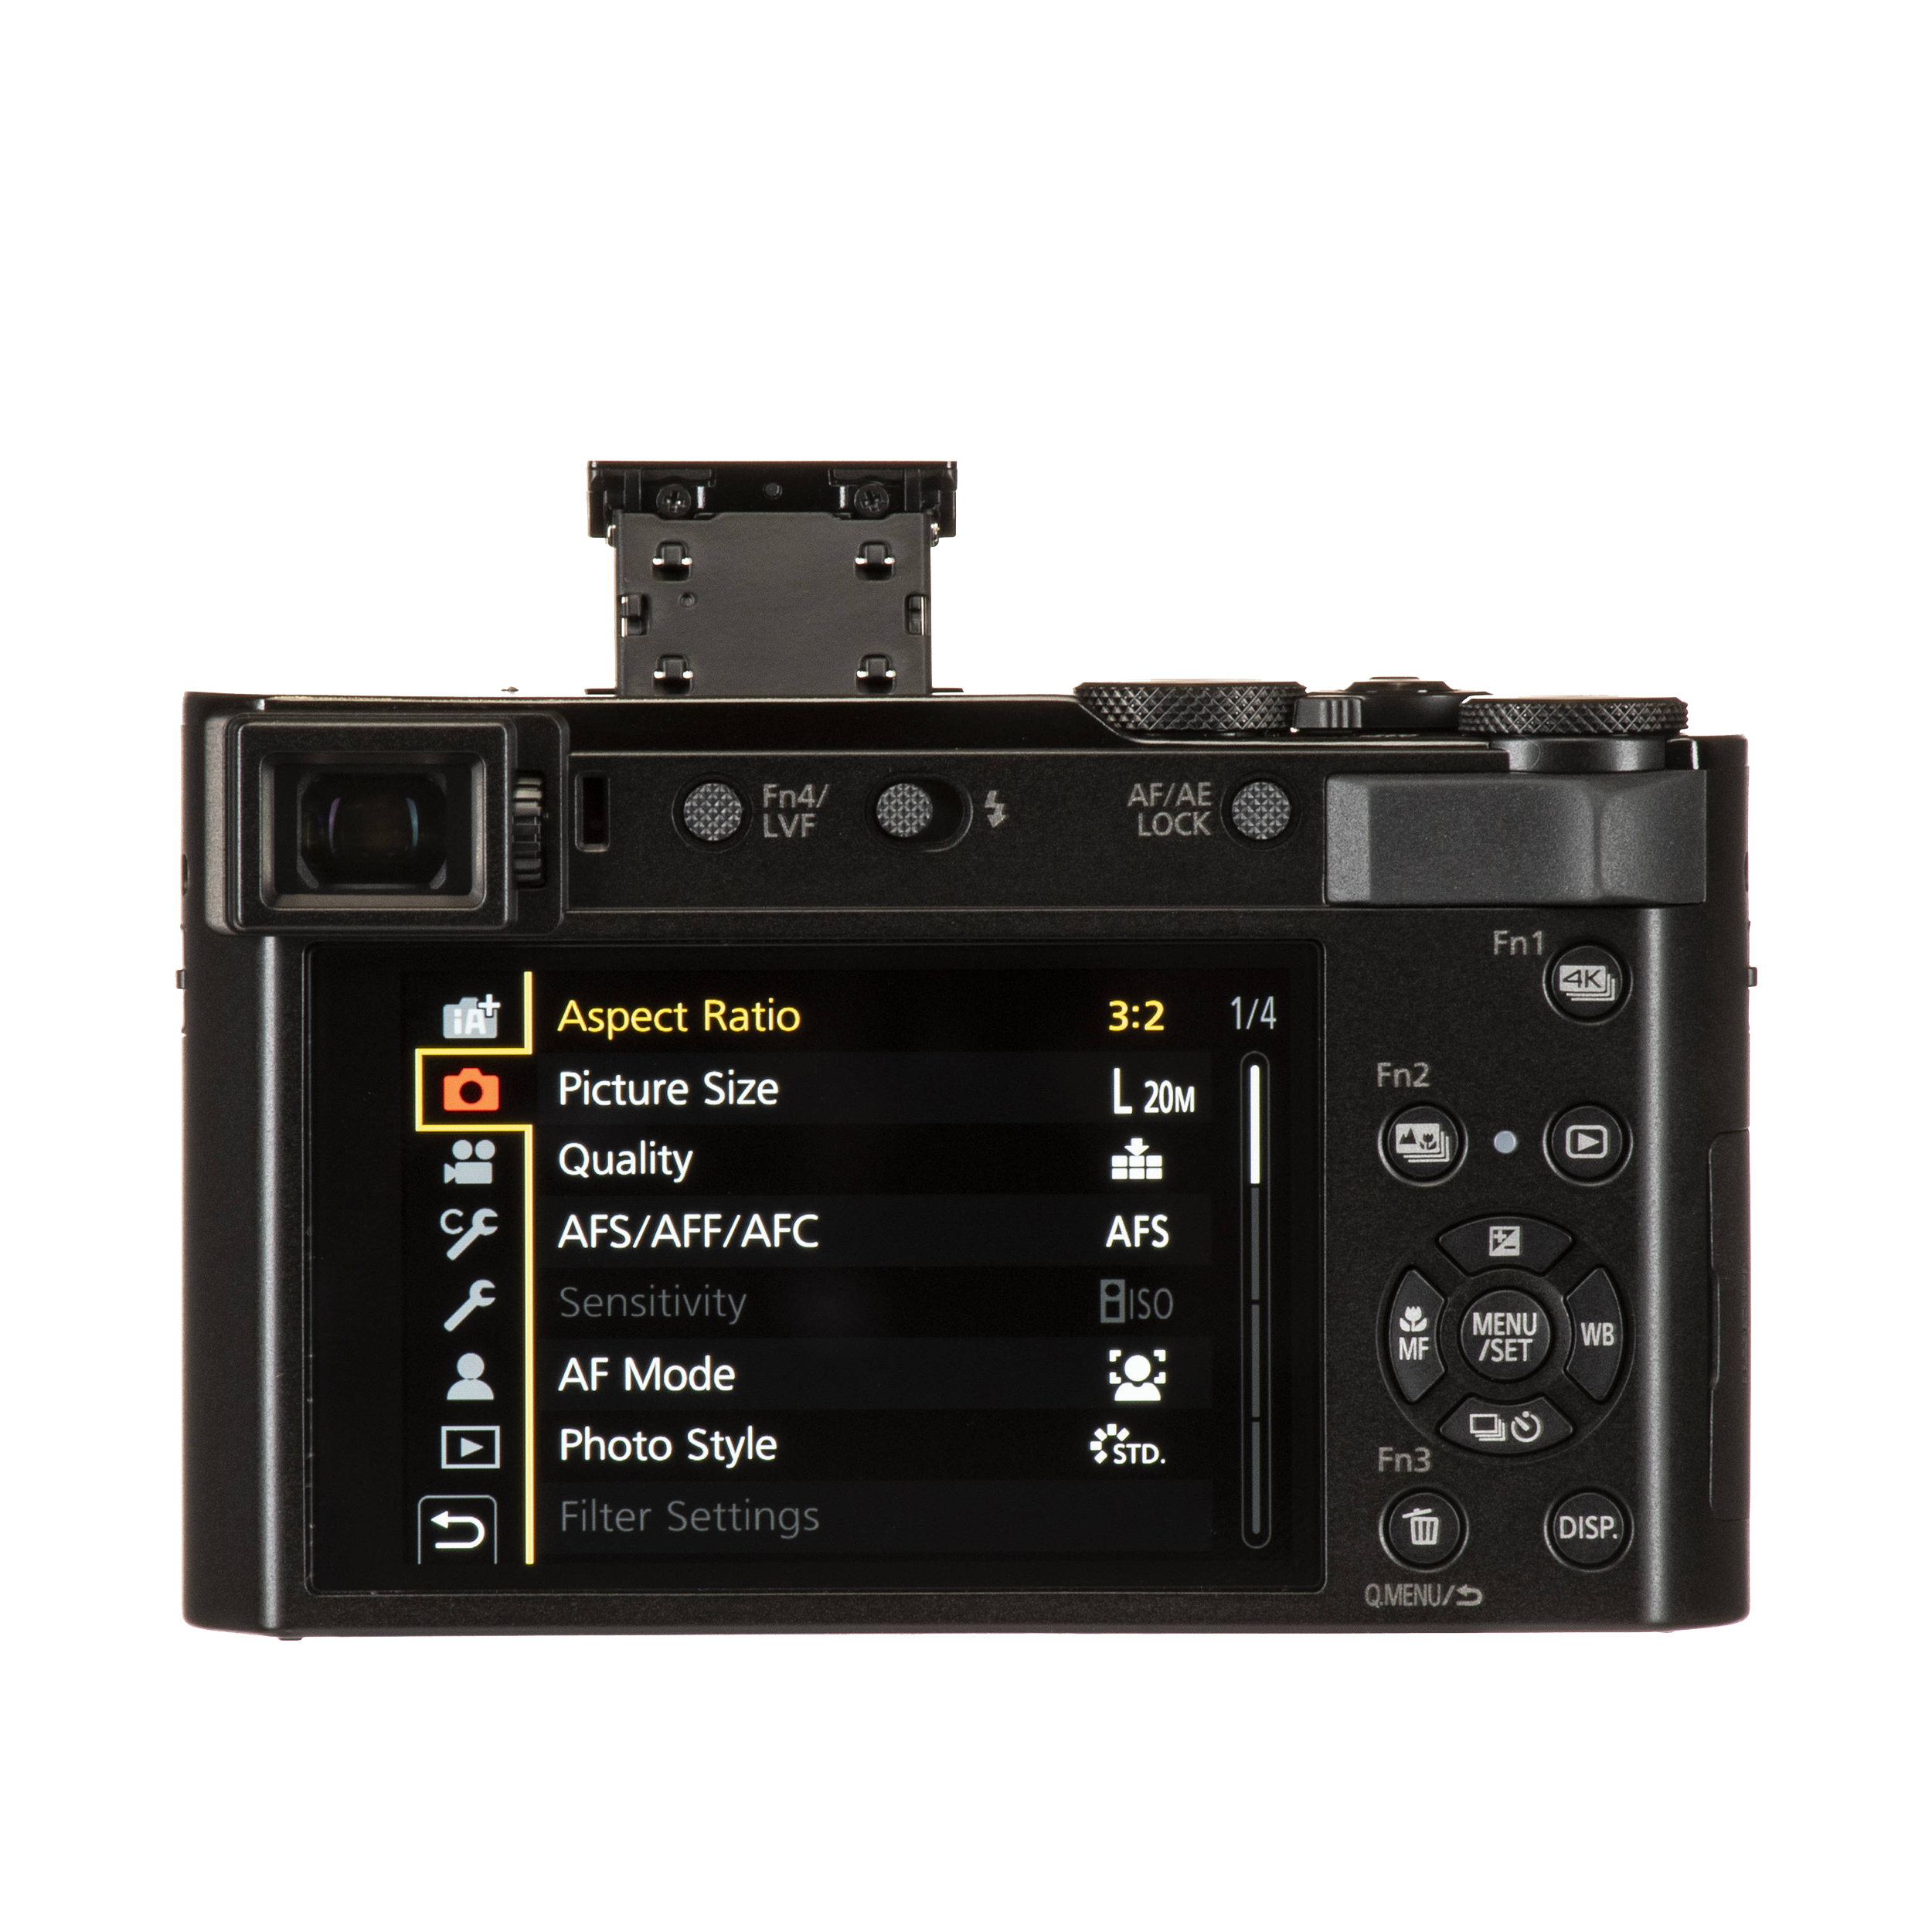 Panasonic Lumix DC-ZS200D Digital Camera - Black